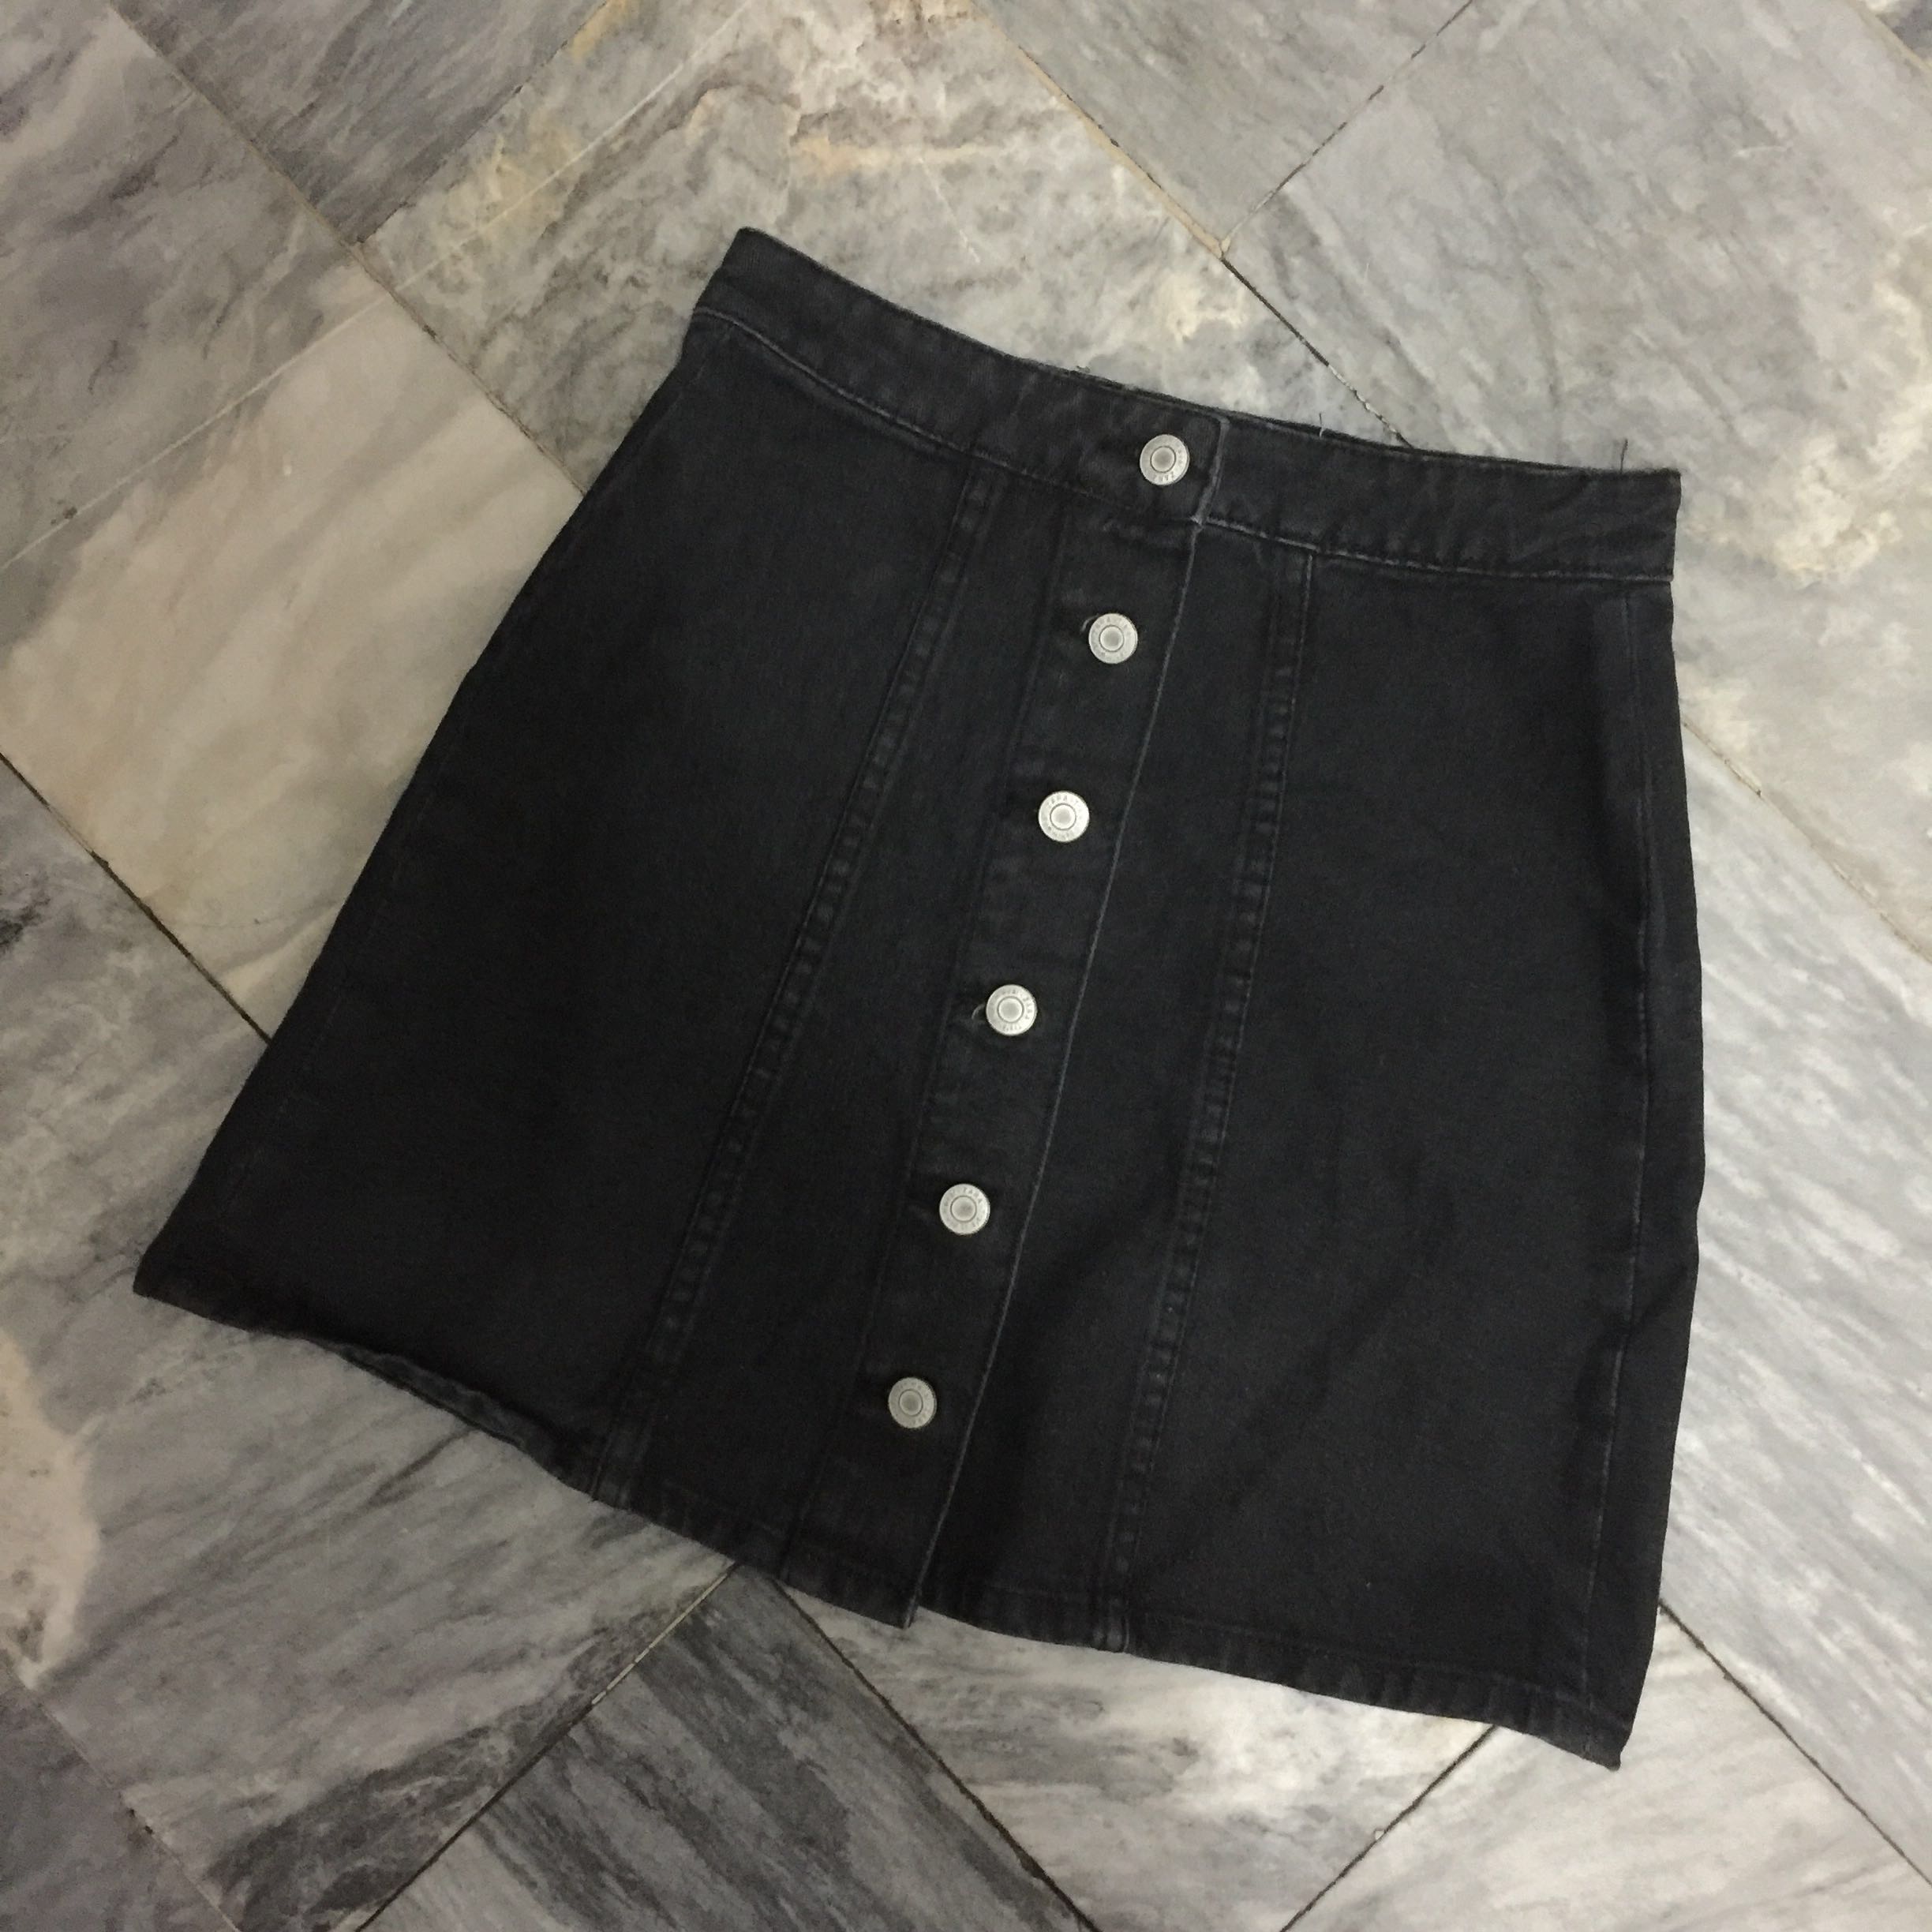 zara black jean skirt